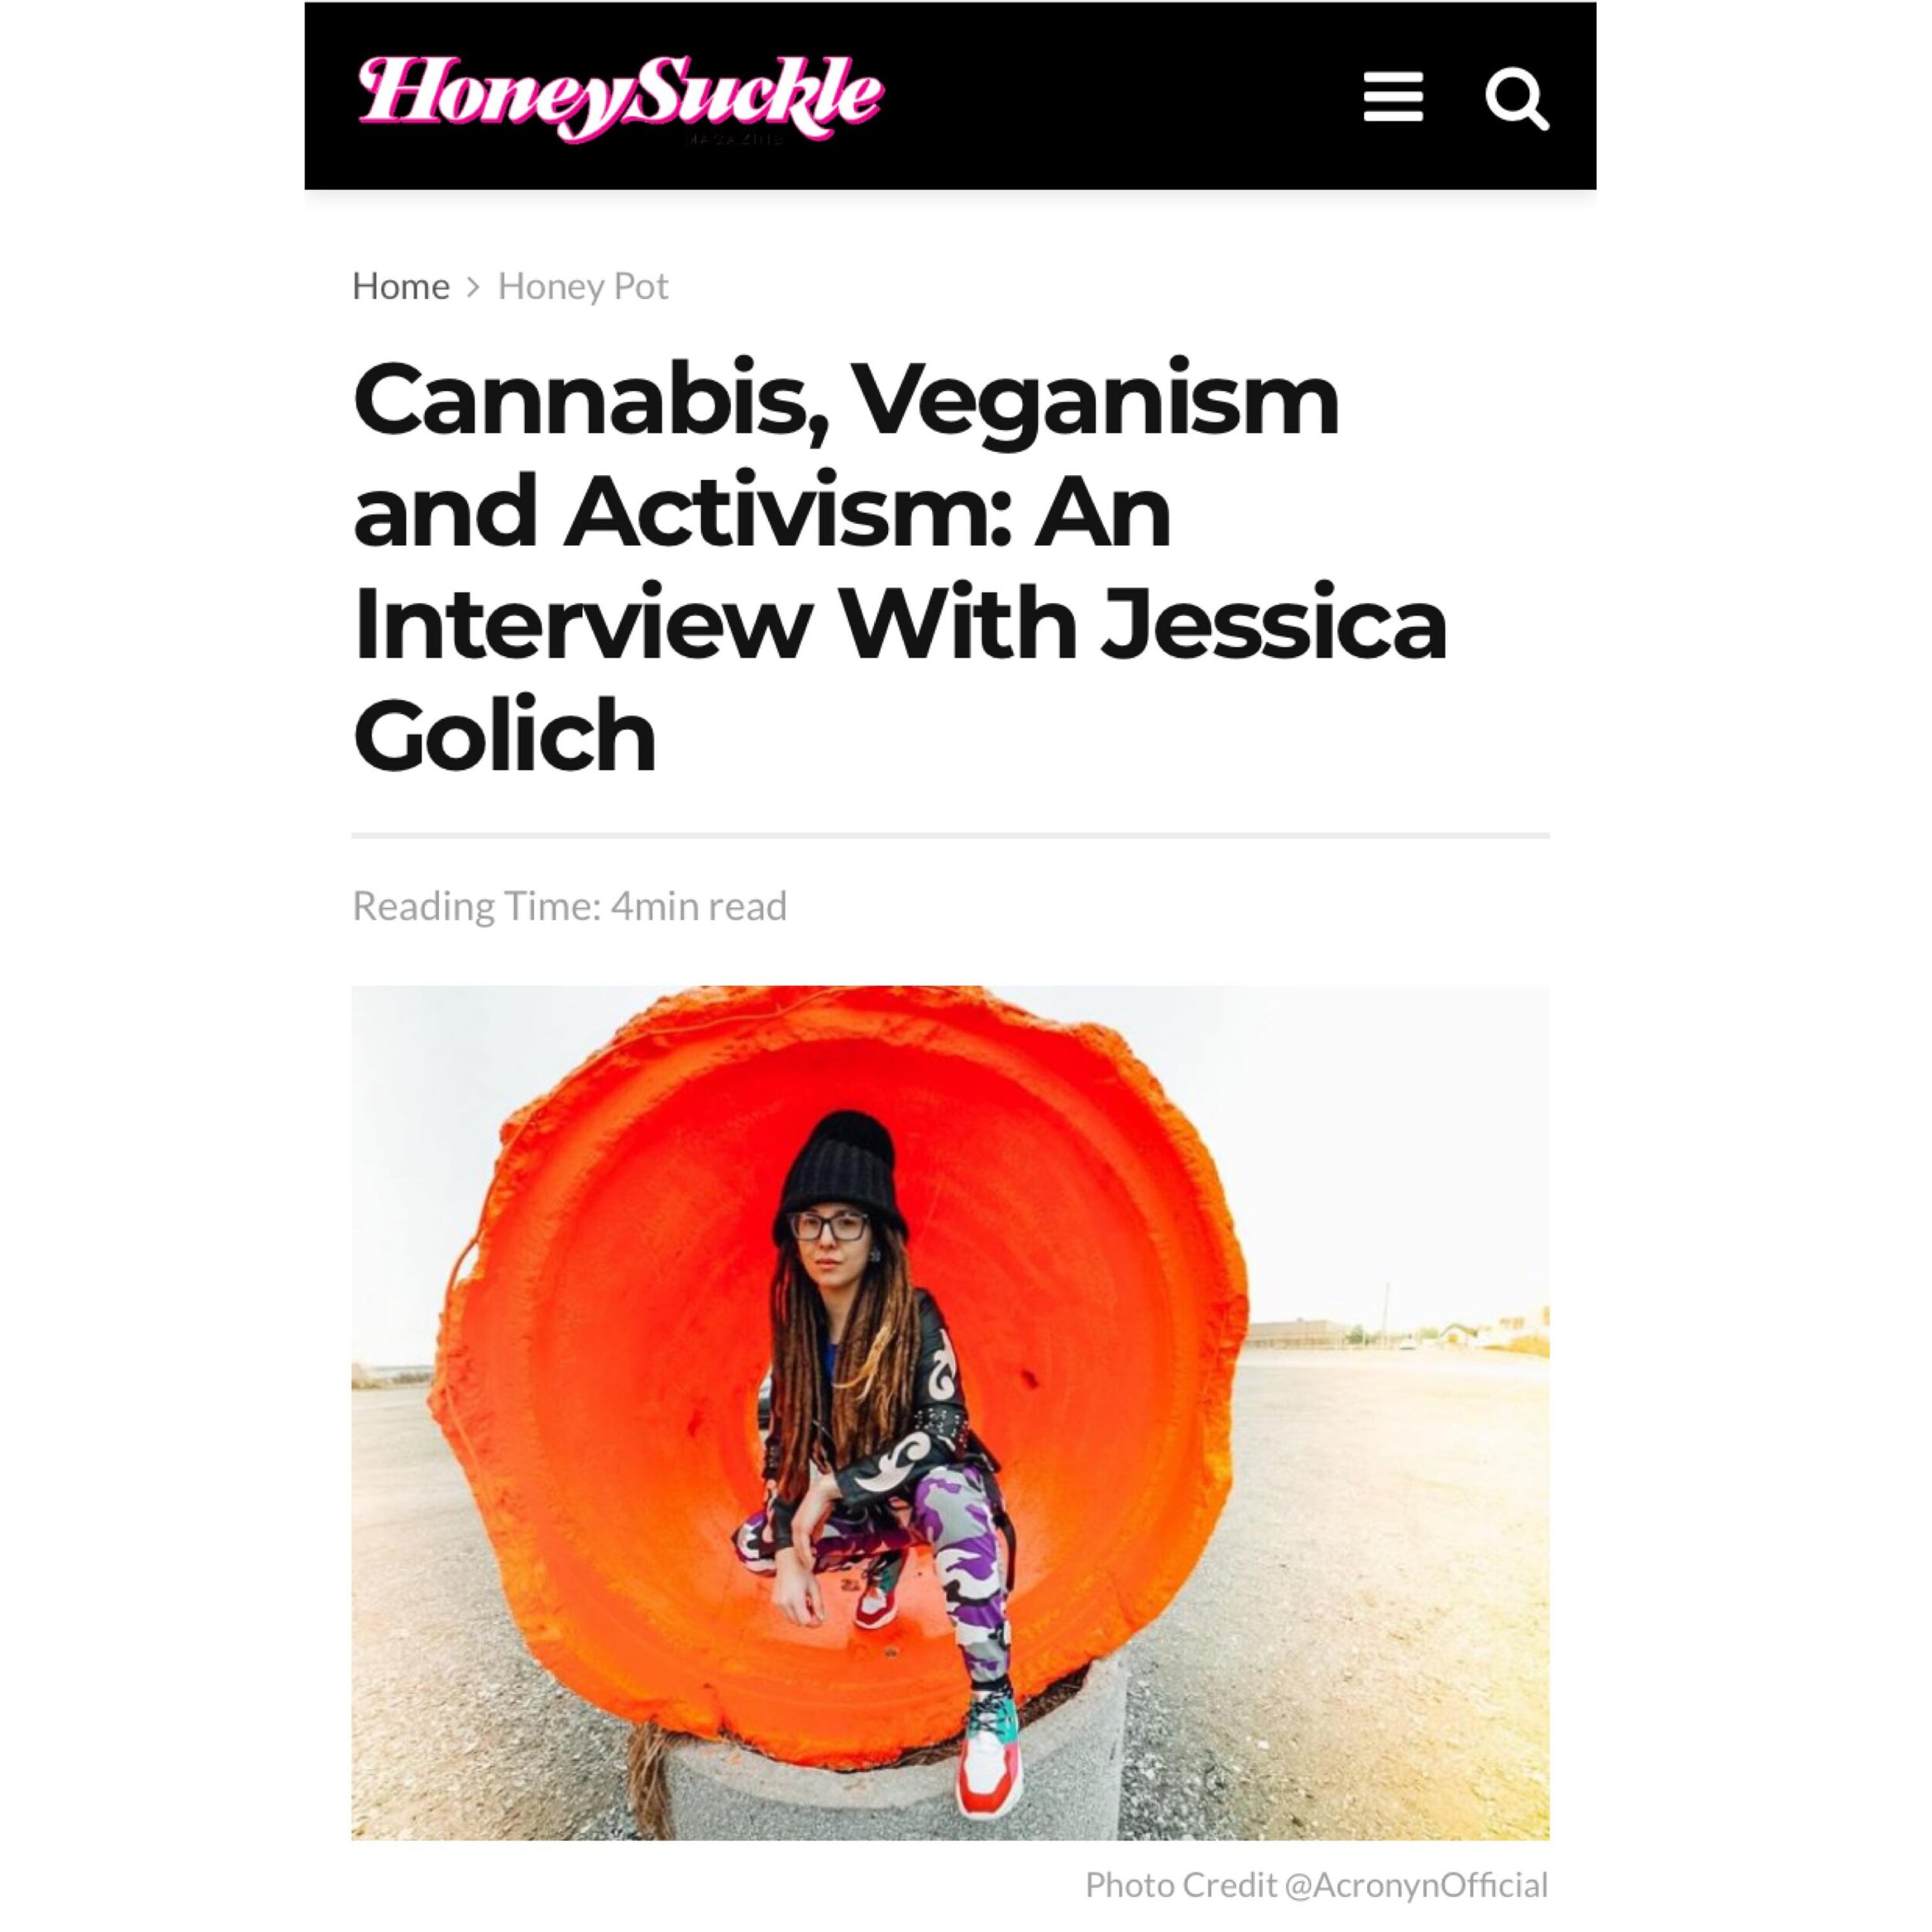 Honeysuckle Magazine - Jessica Golich